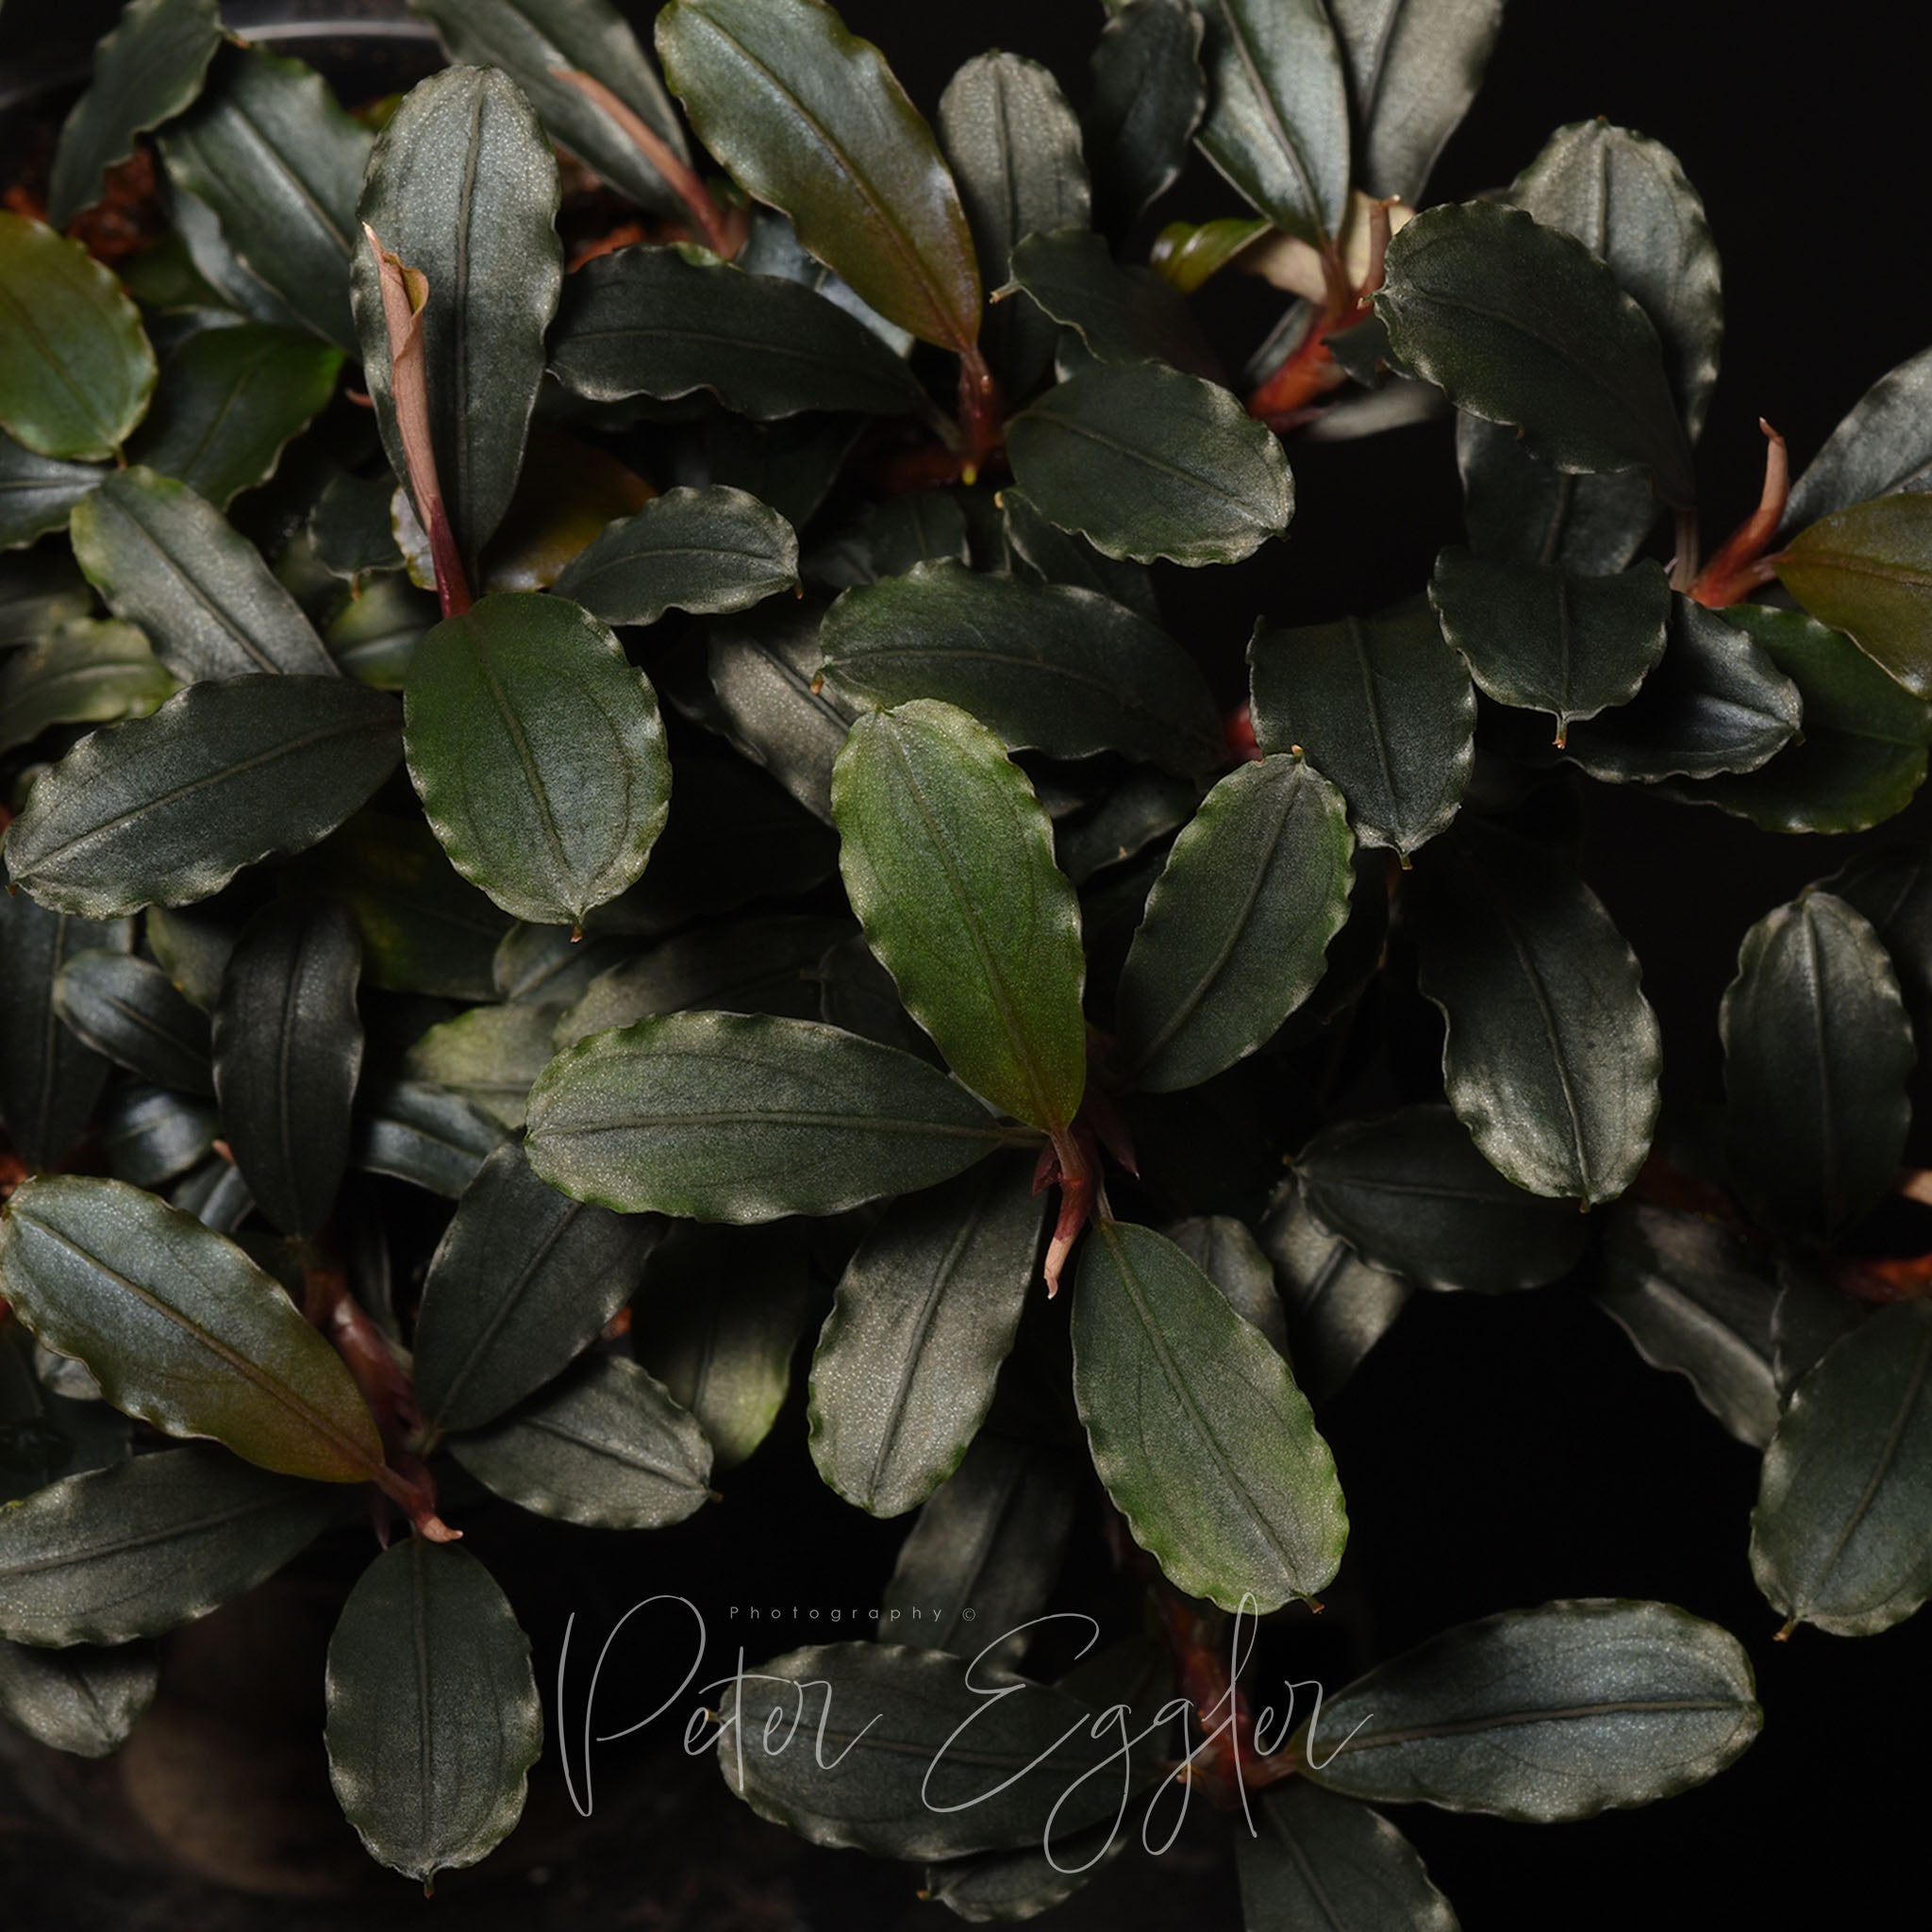 Small compact dark leaf Bucephalandra species growing in terrarium